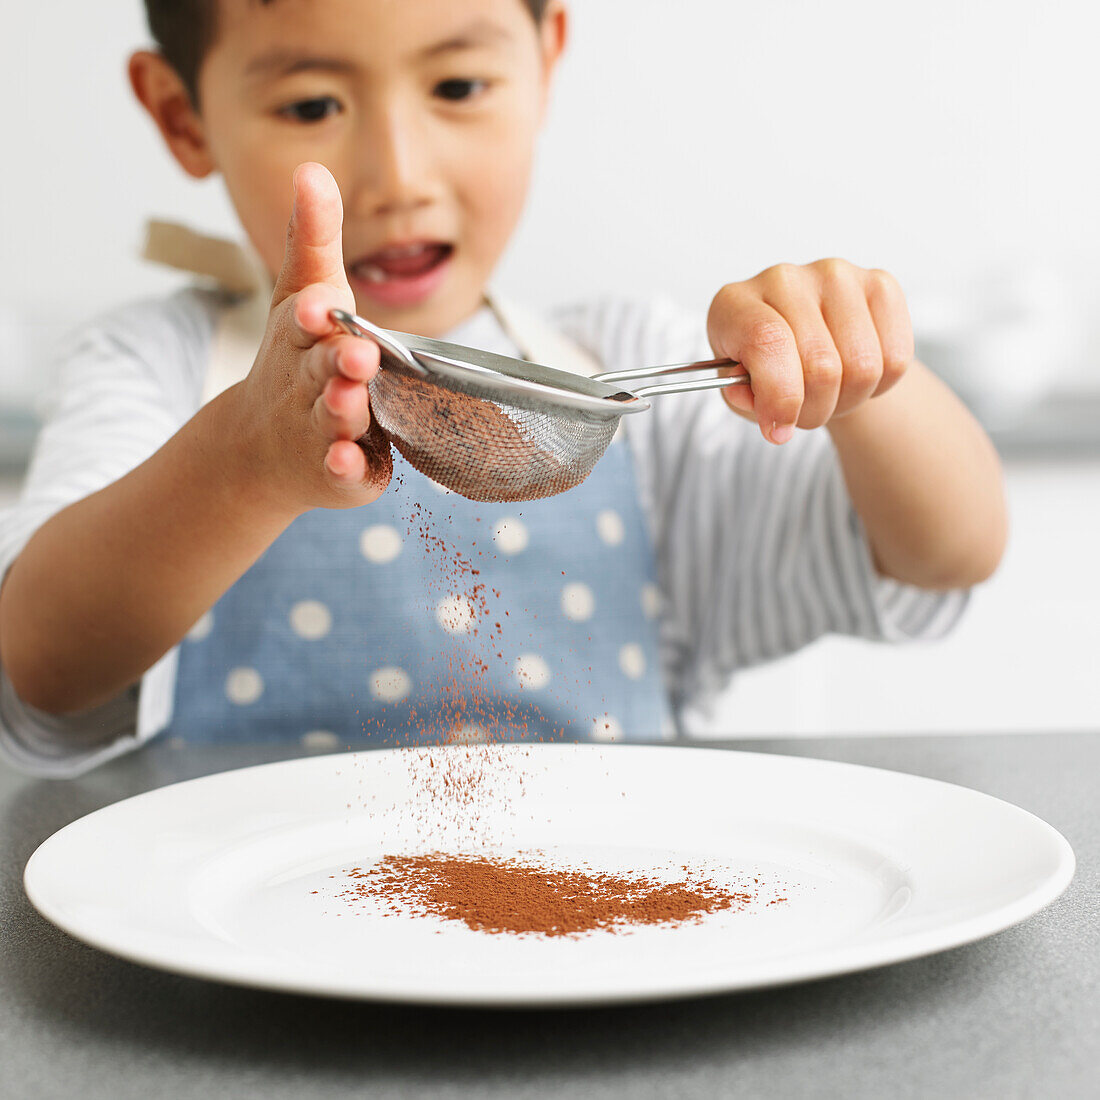 Boy sifting chocolate powder onto a plate